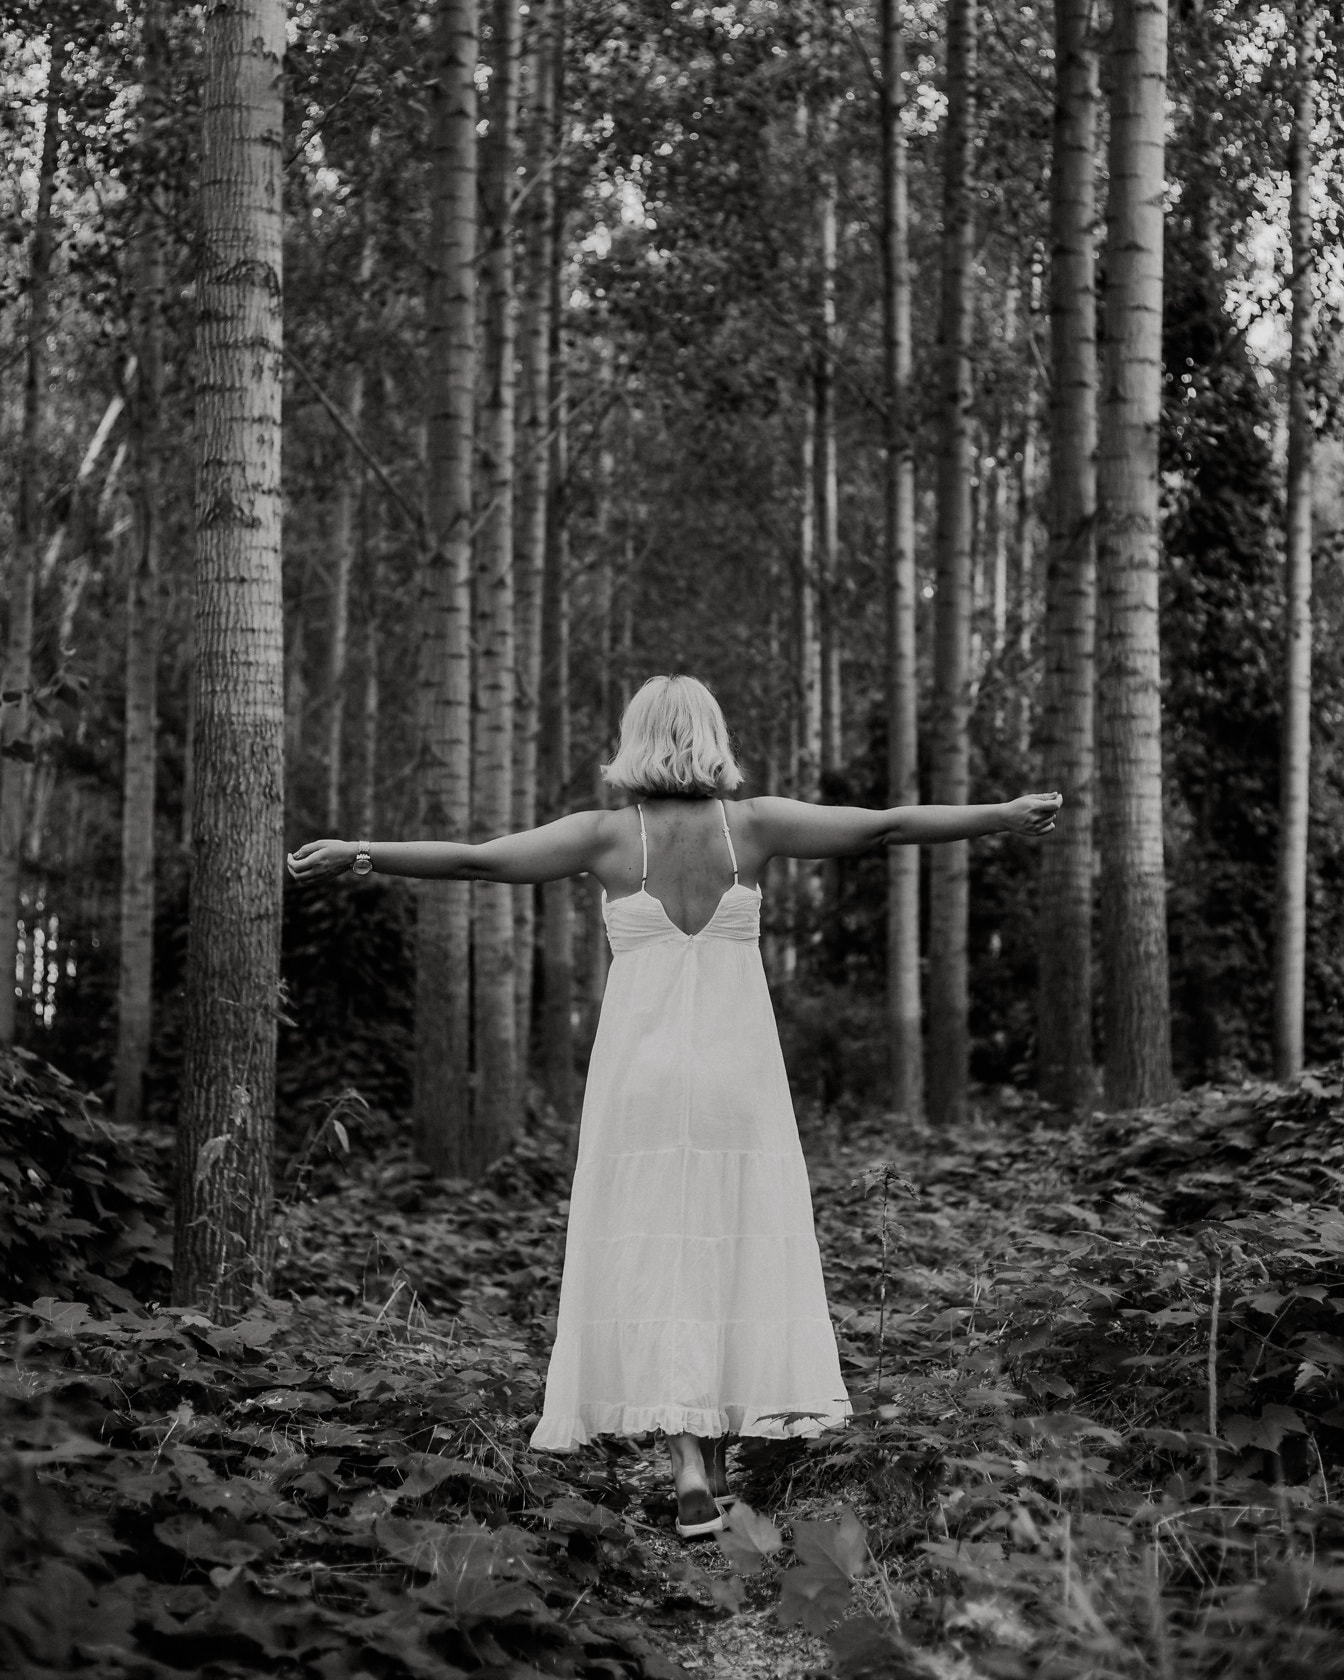 Vrolijke vrouw in witte kleding in bos zwart-wit fotografie